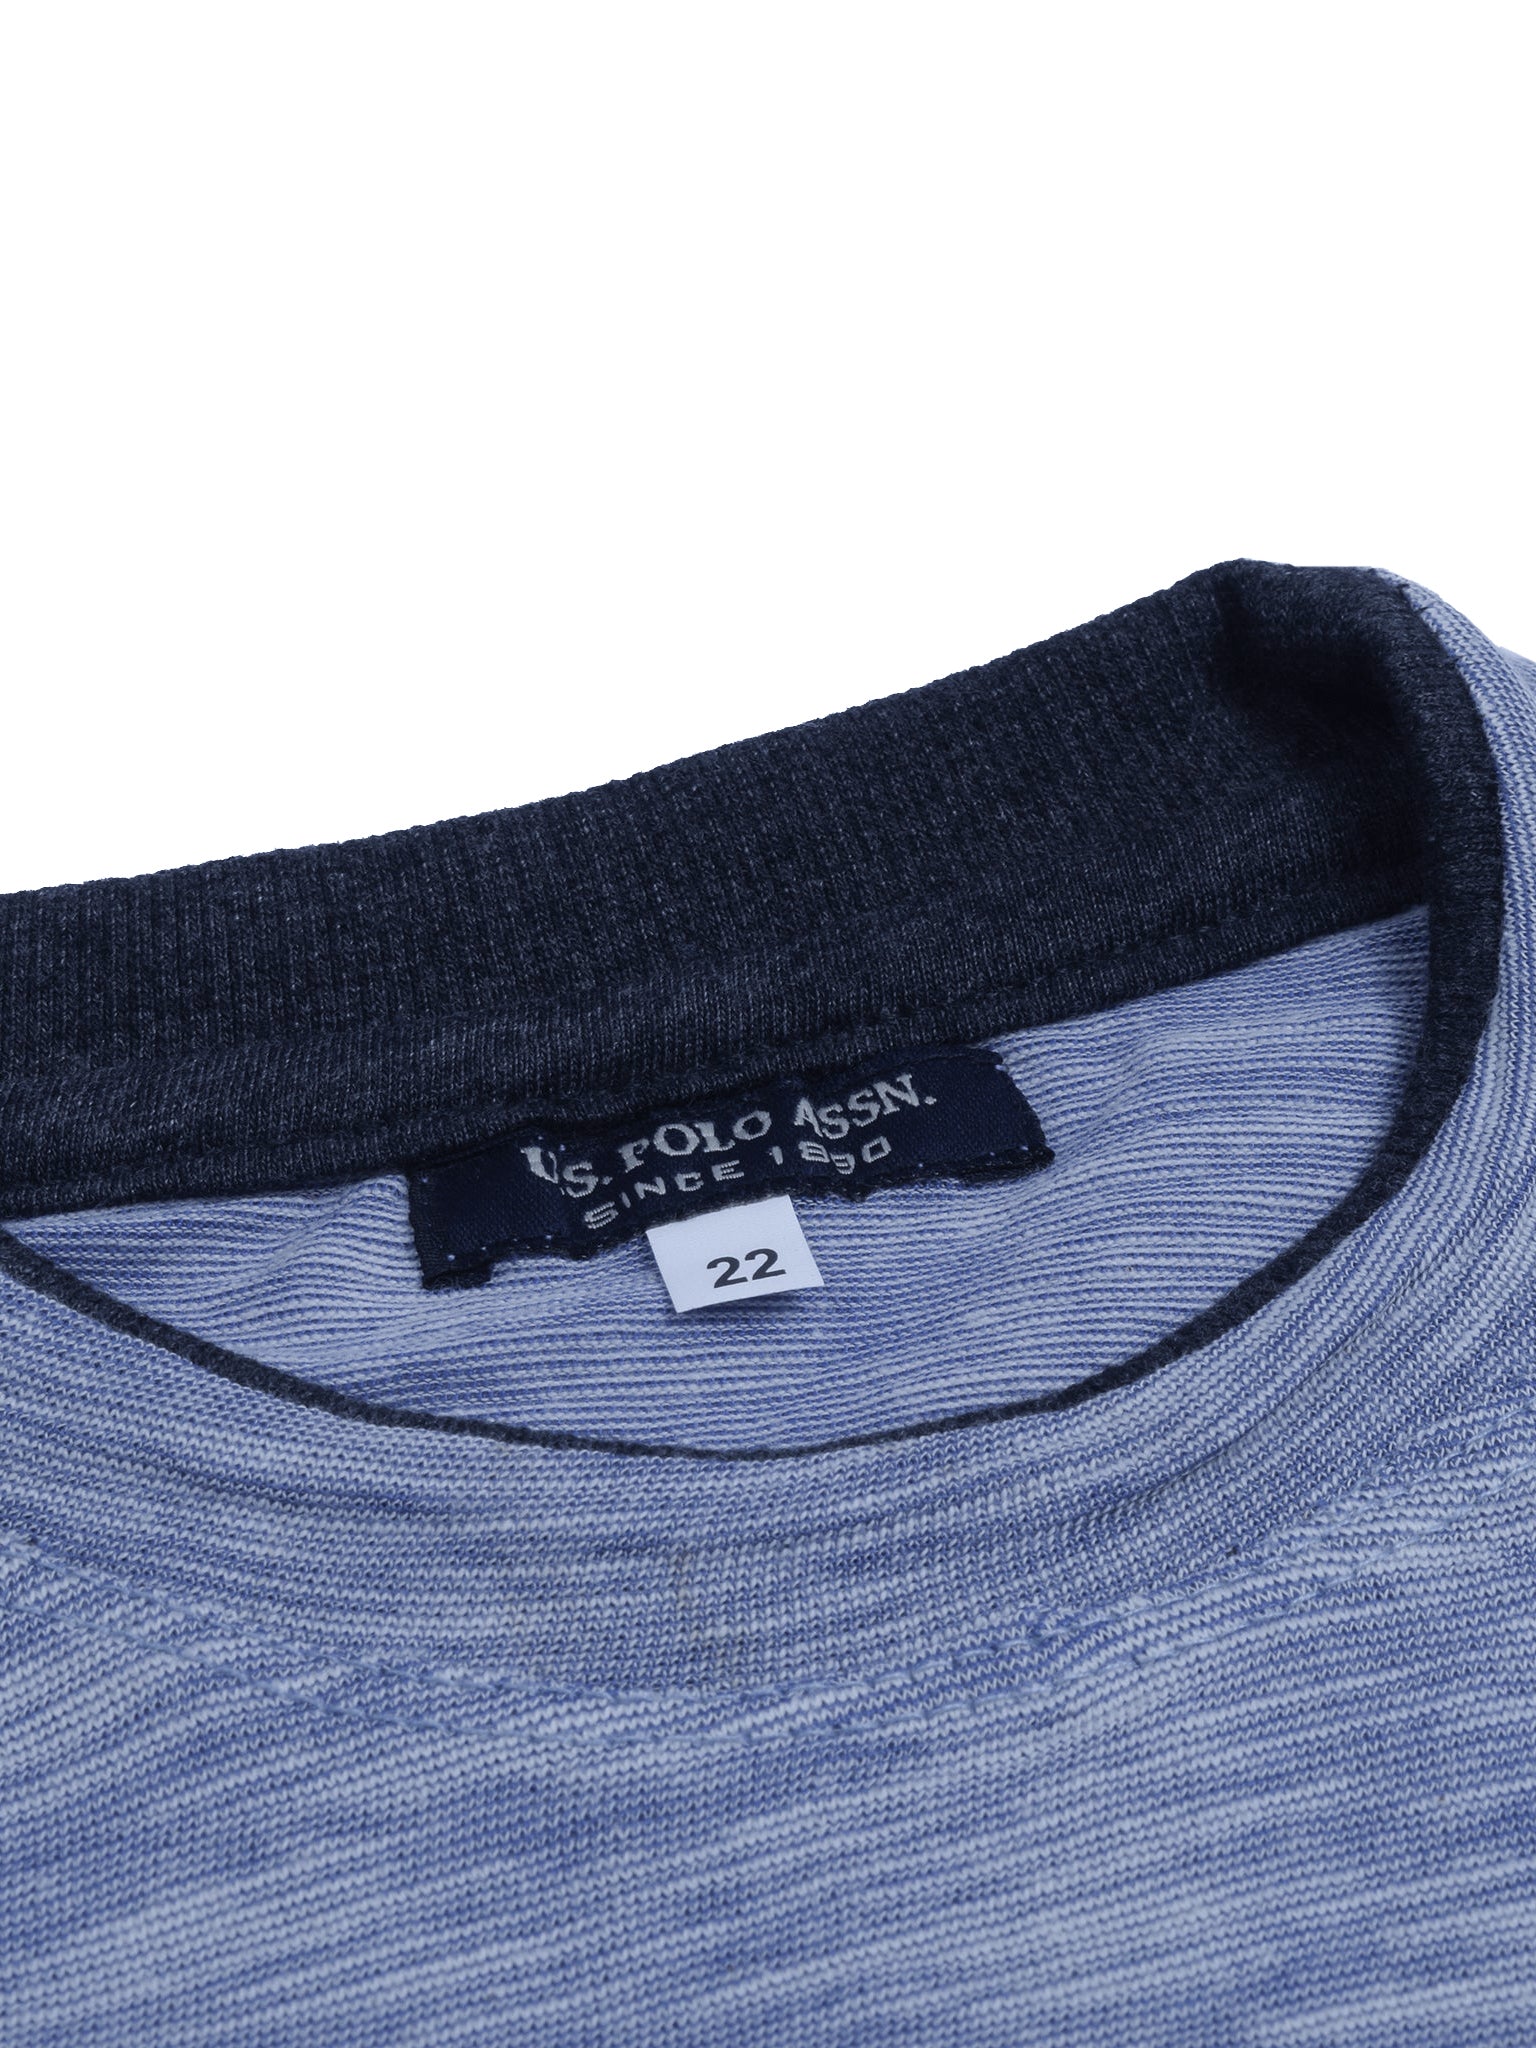 US POLO ASSN Single Jersey Long Sleeve Tee Shirt For Kids-Blue & Charcoal Melange-BE1156